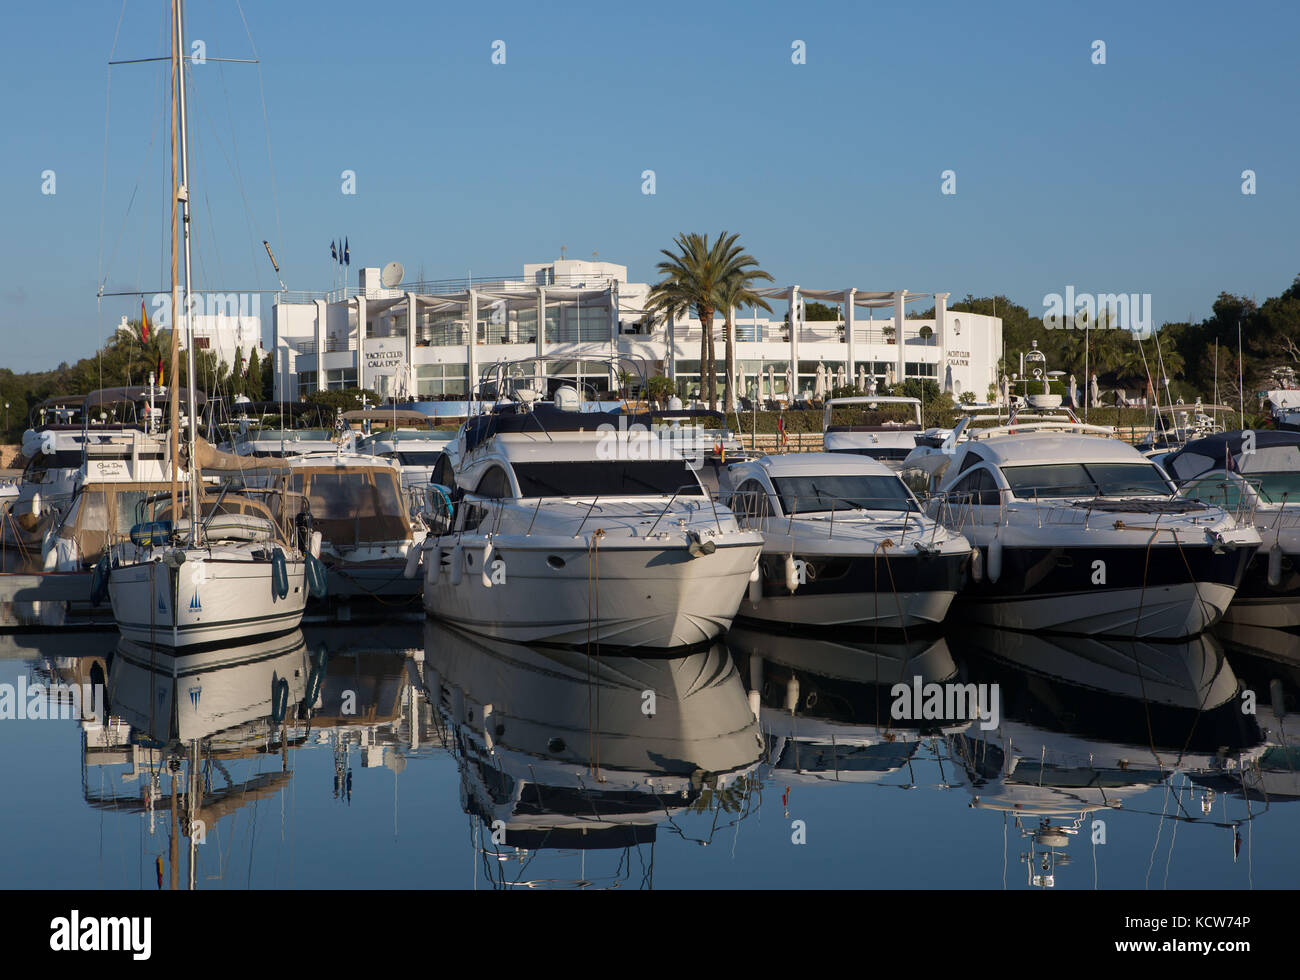 Yacht e Barche a vela ormeggiata in porto turistico yacht club cala d'or in background, cala d'or, Maiorca, isole Baleari, Spagna. Foto Stock